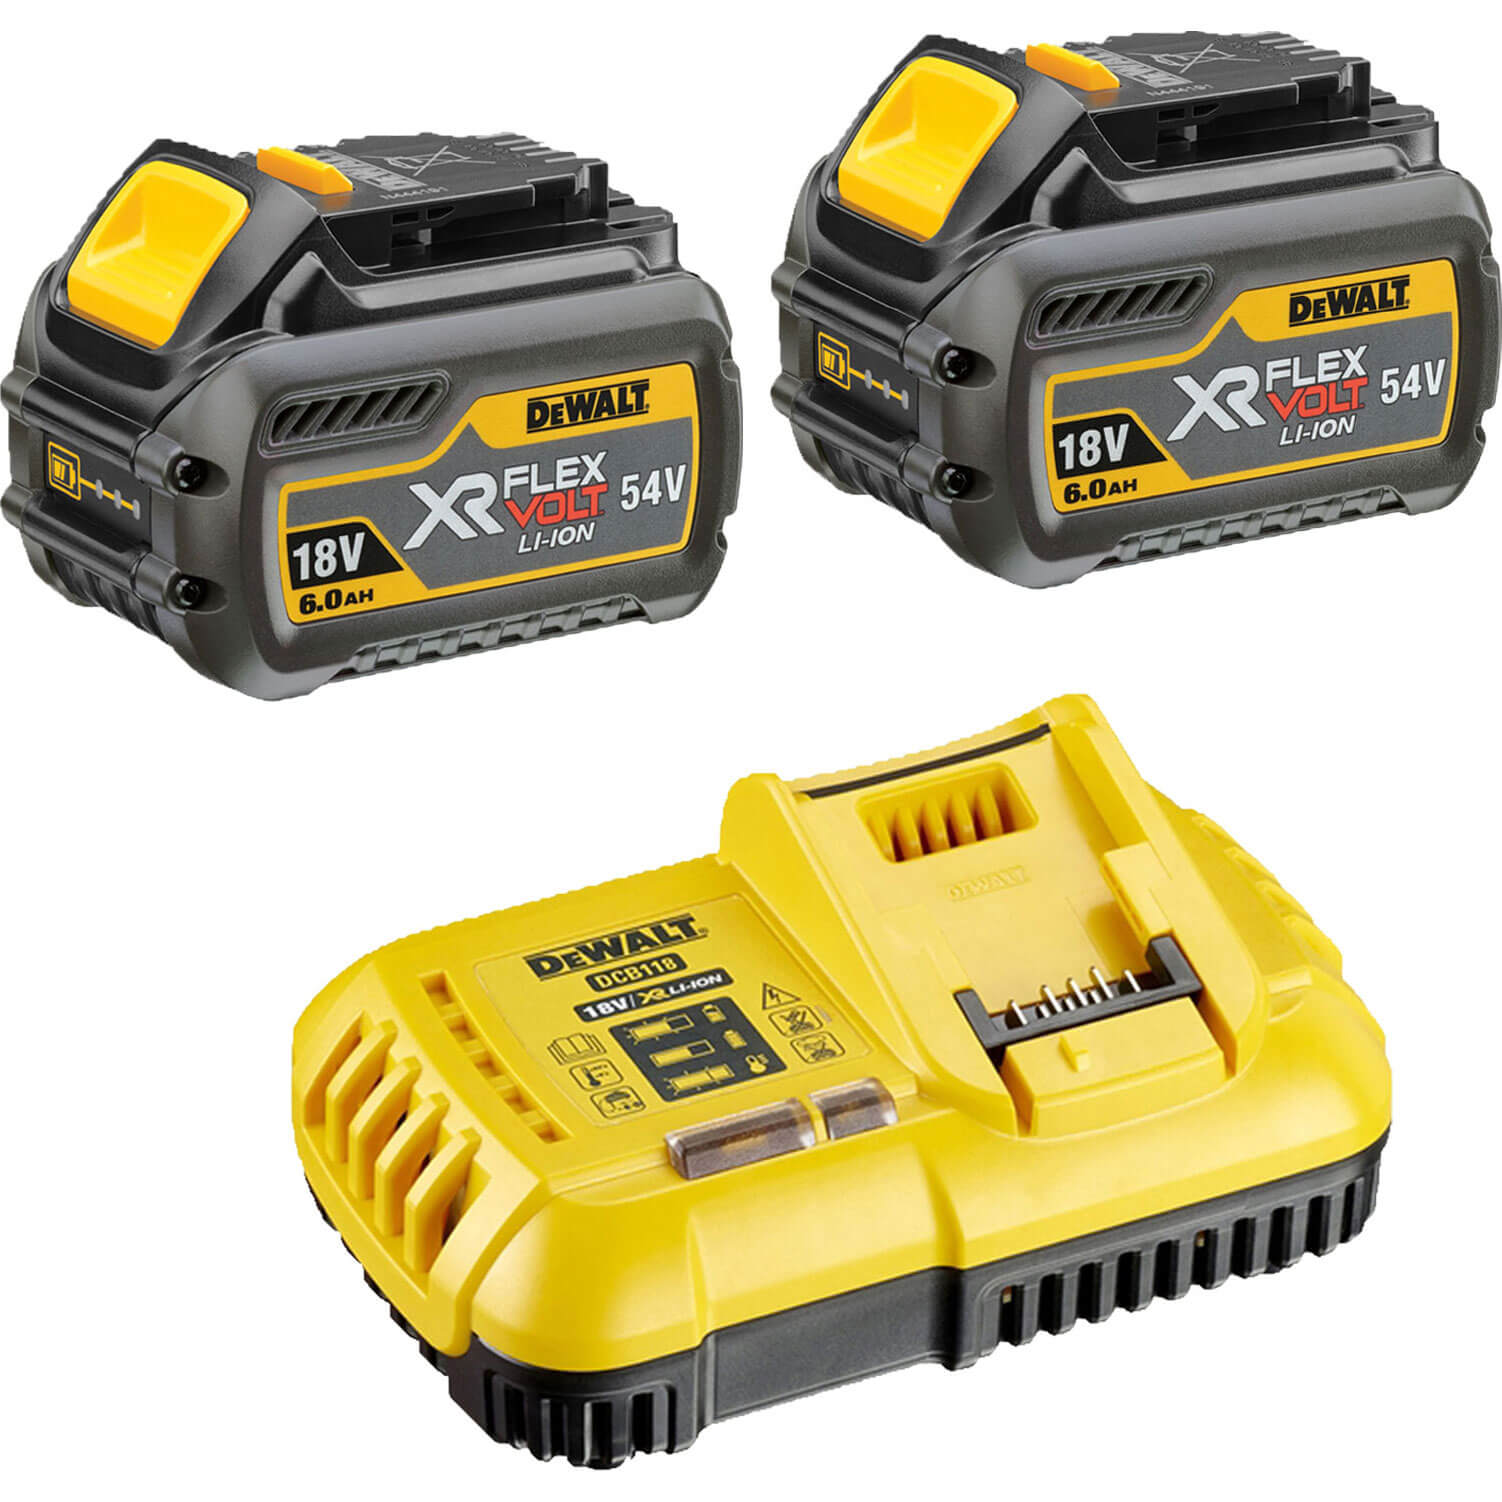 Photos - Power Tool Battery DeWALT 54v XR Cordless FLEXVOLT Twin Li-ion Battery and Fast Charger Pack 